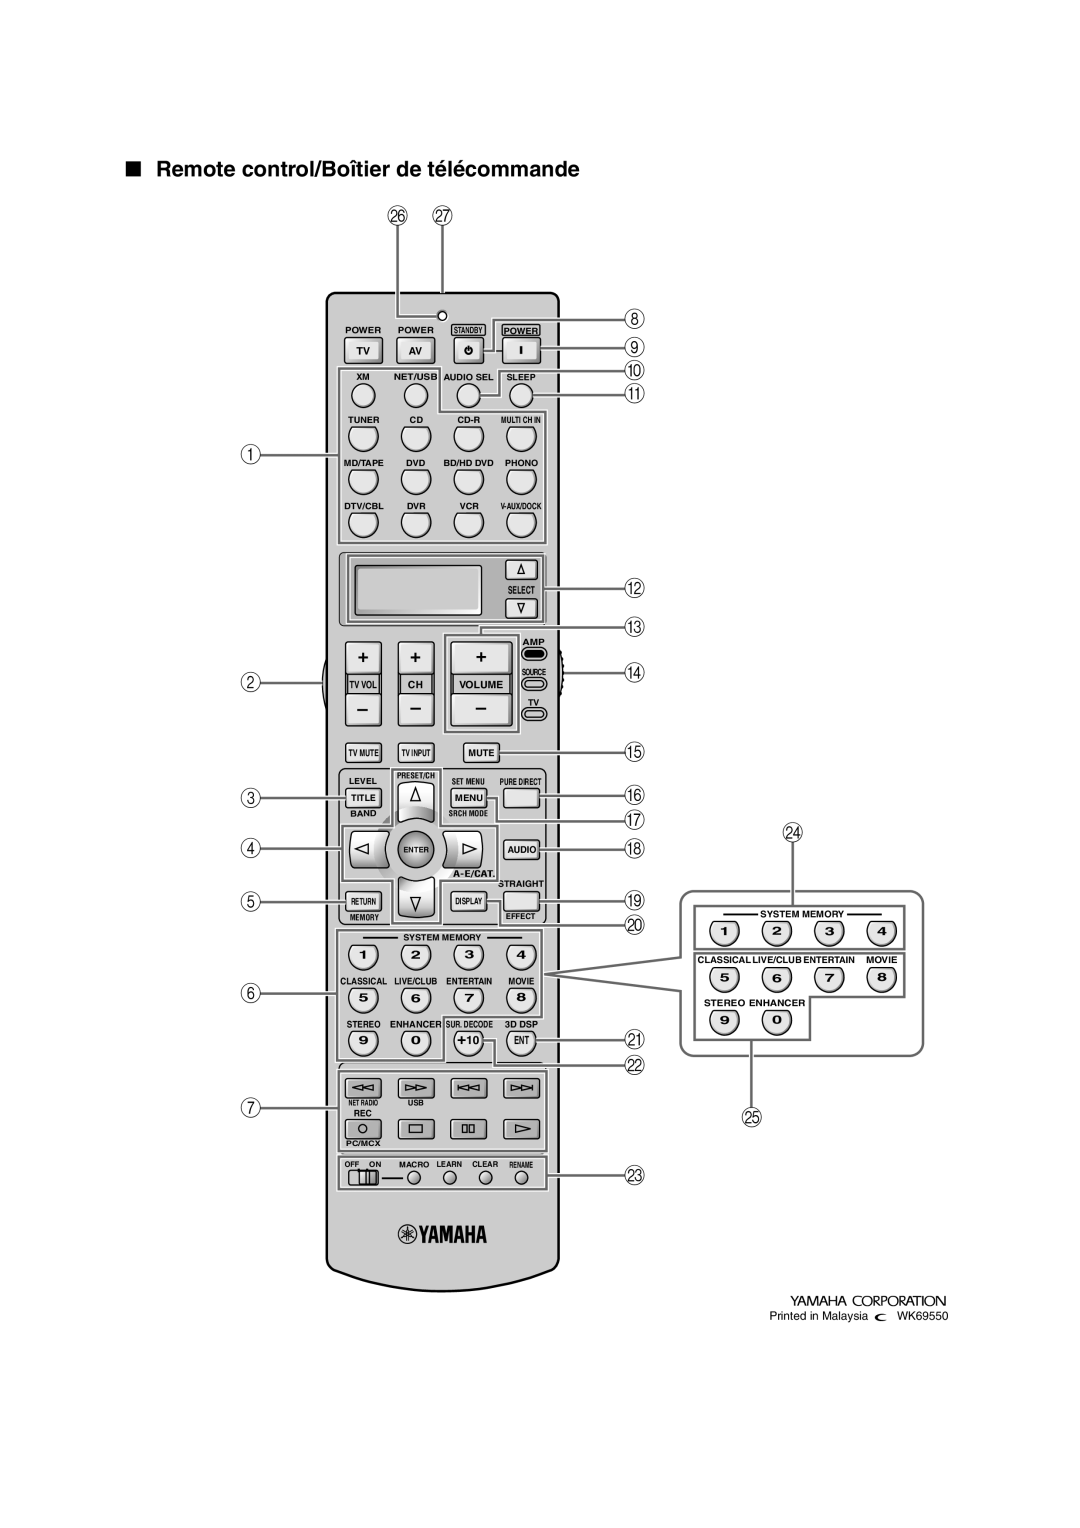 Yamaha RX-V3800 owner manual Remote control/Boîtier de télécommande, Printed in Malaysia WK69550 